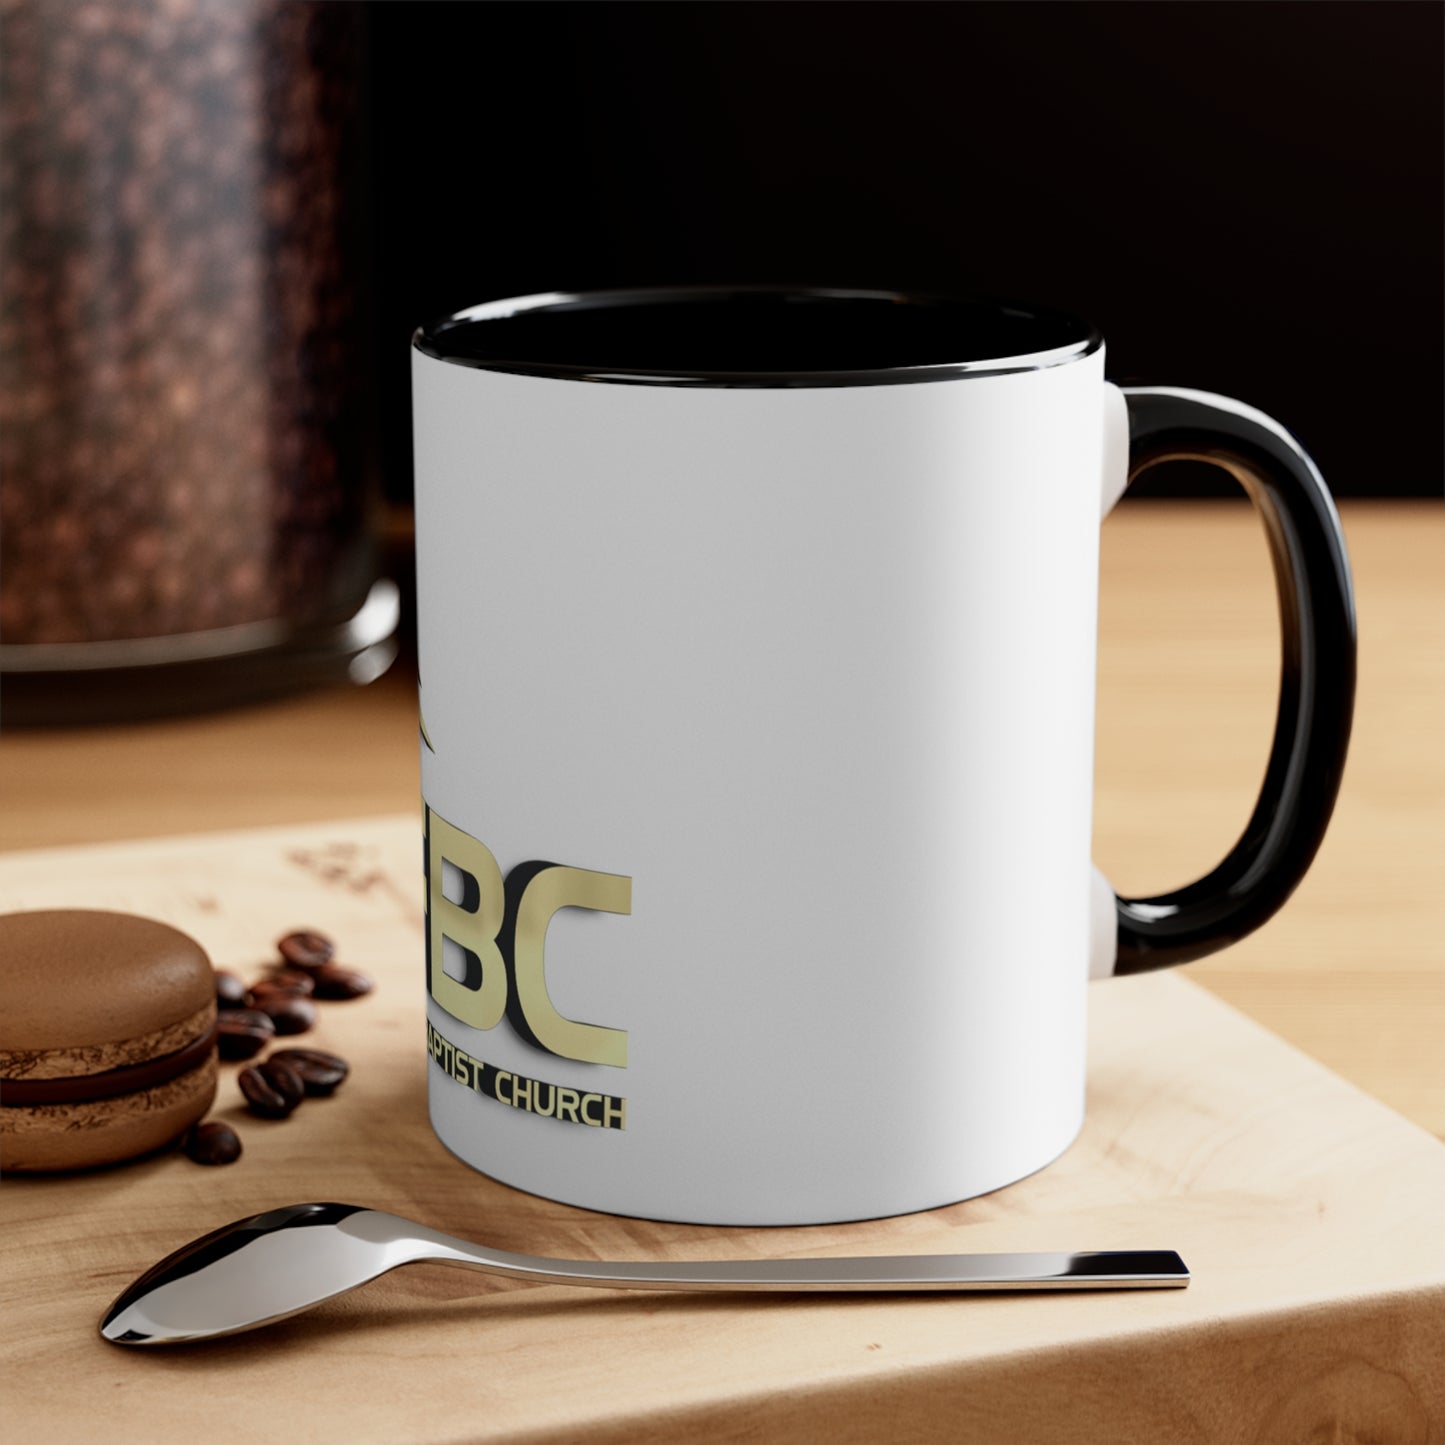 New FBC Accent Coffee Mug, 11oz